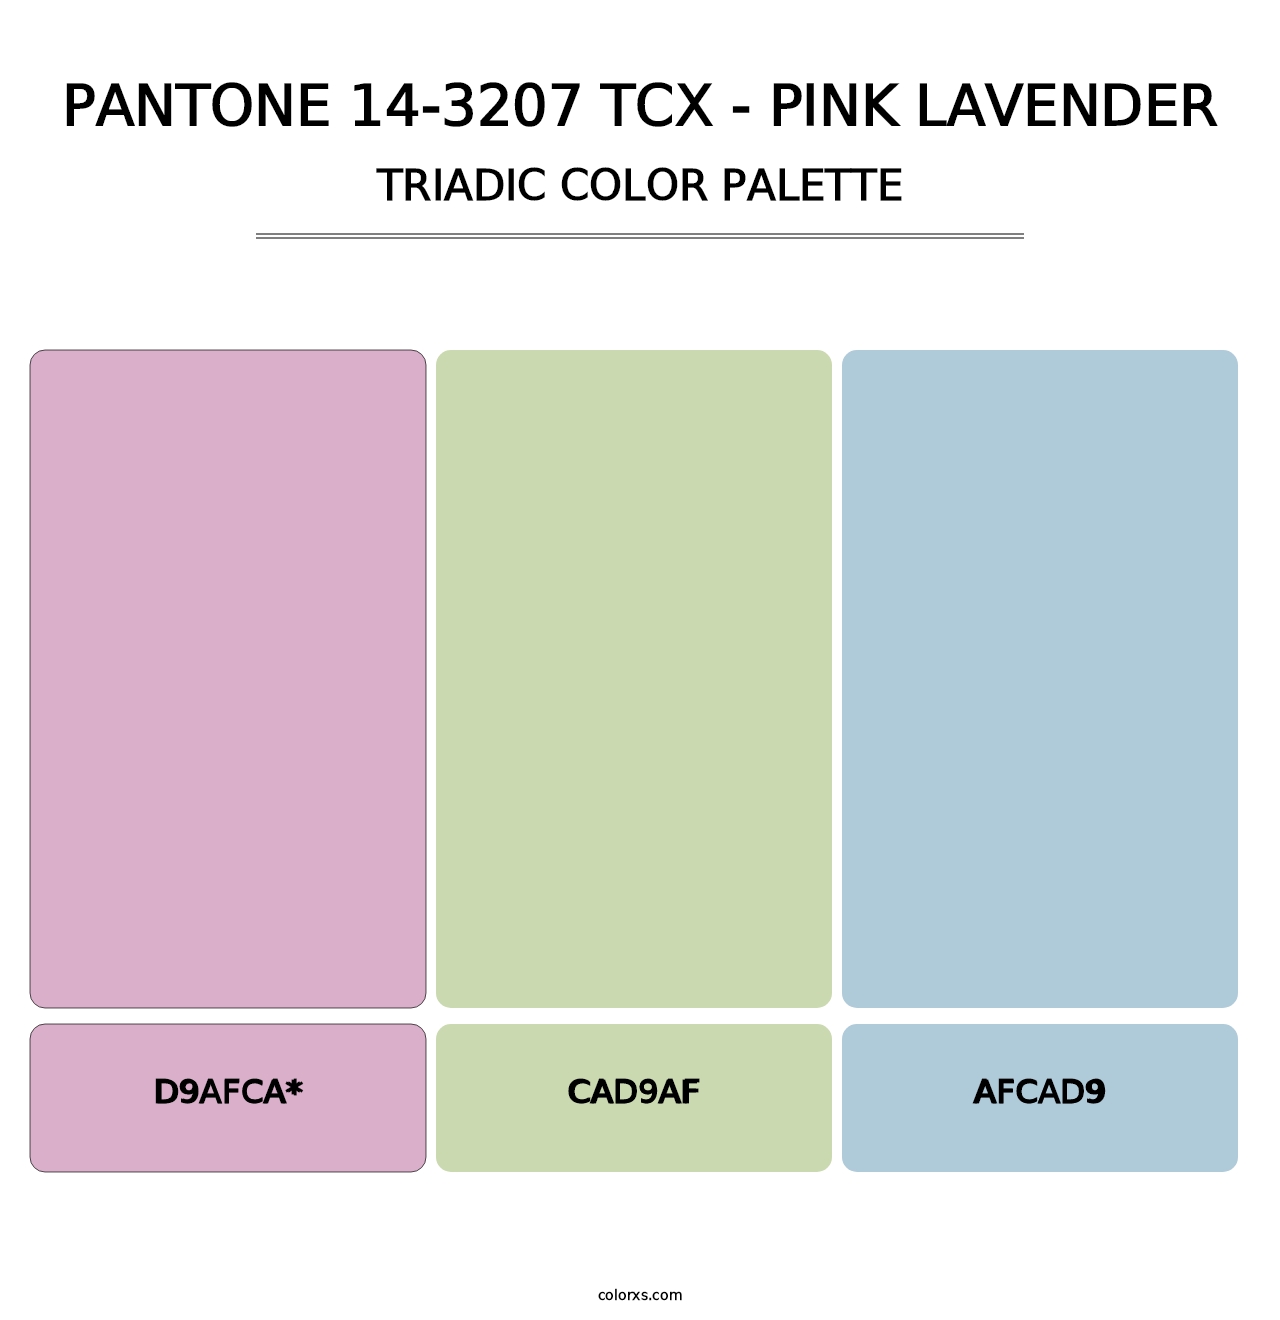 PANTONE 14-3207 TCX - Pink Lavender - Triadic Color Palette